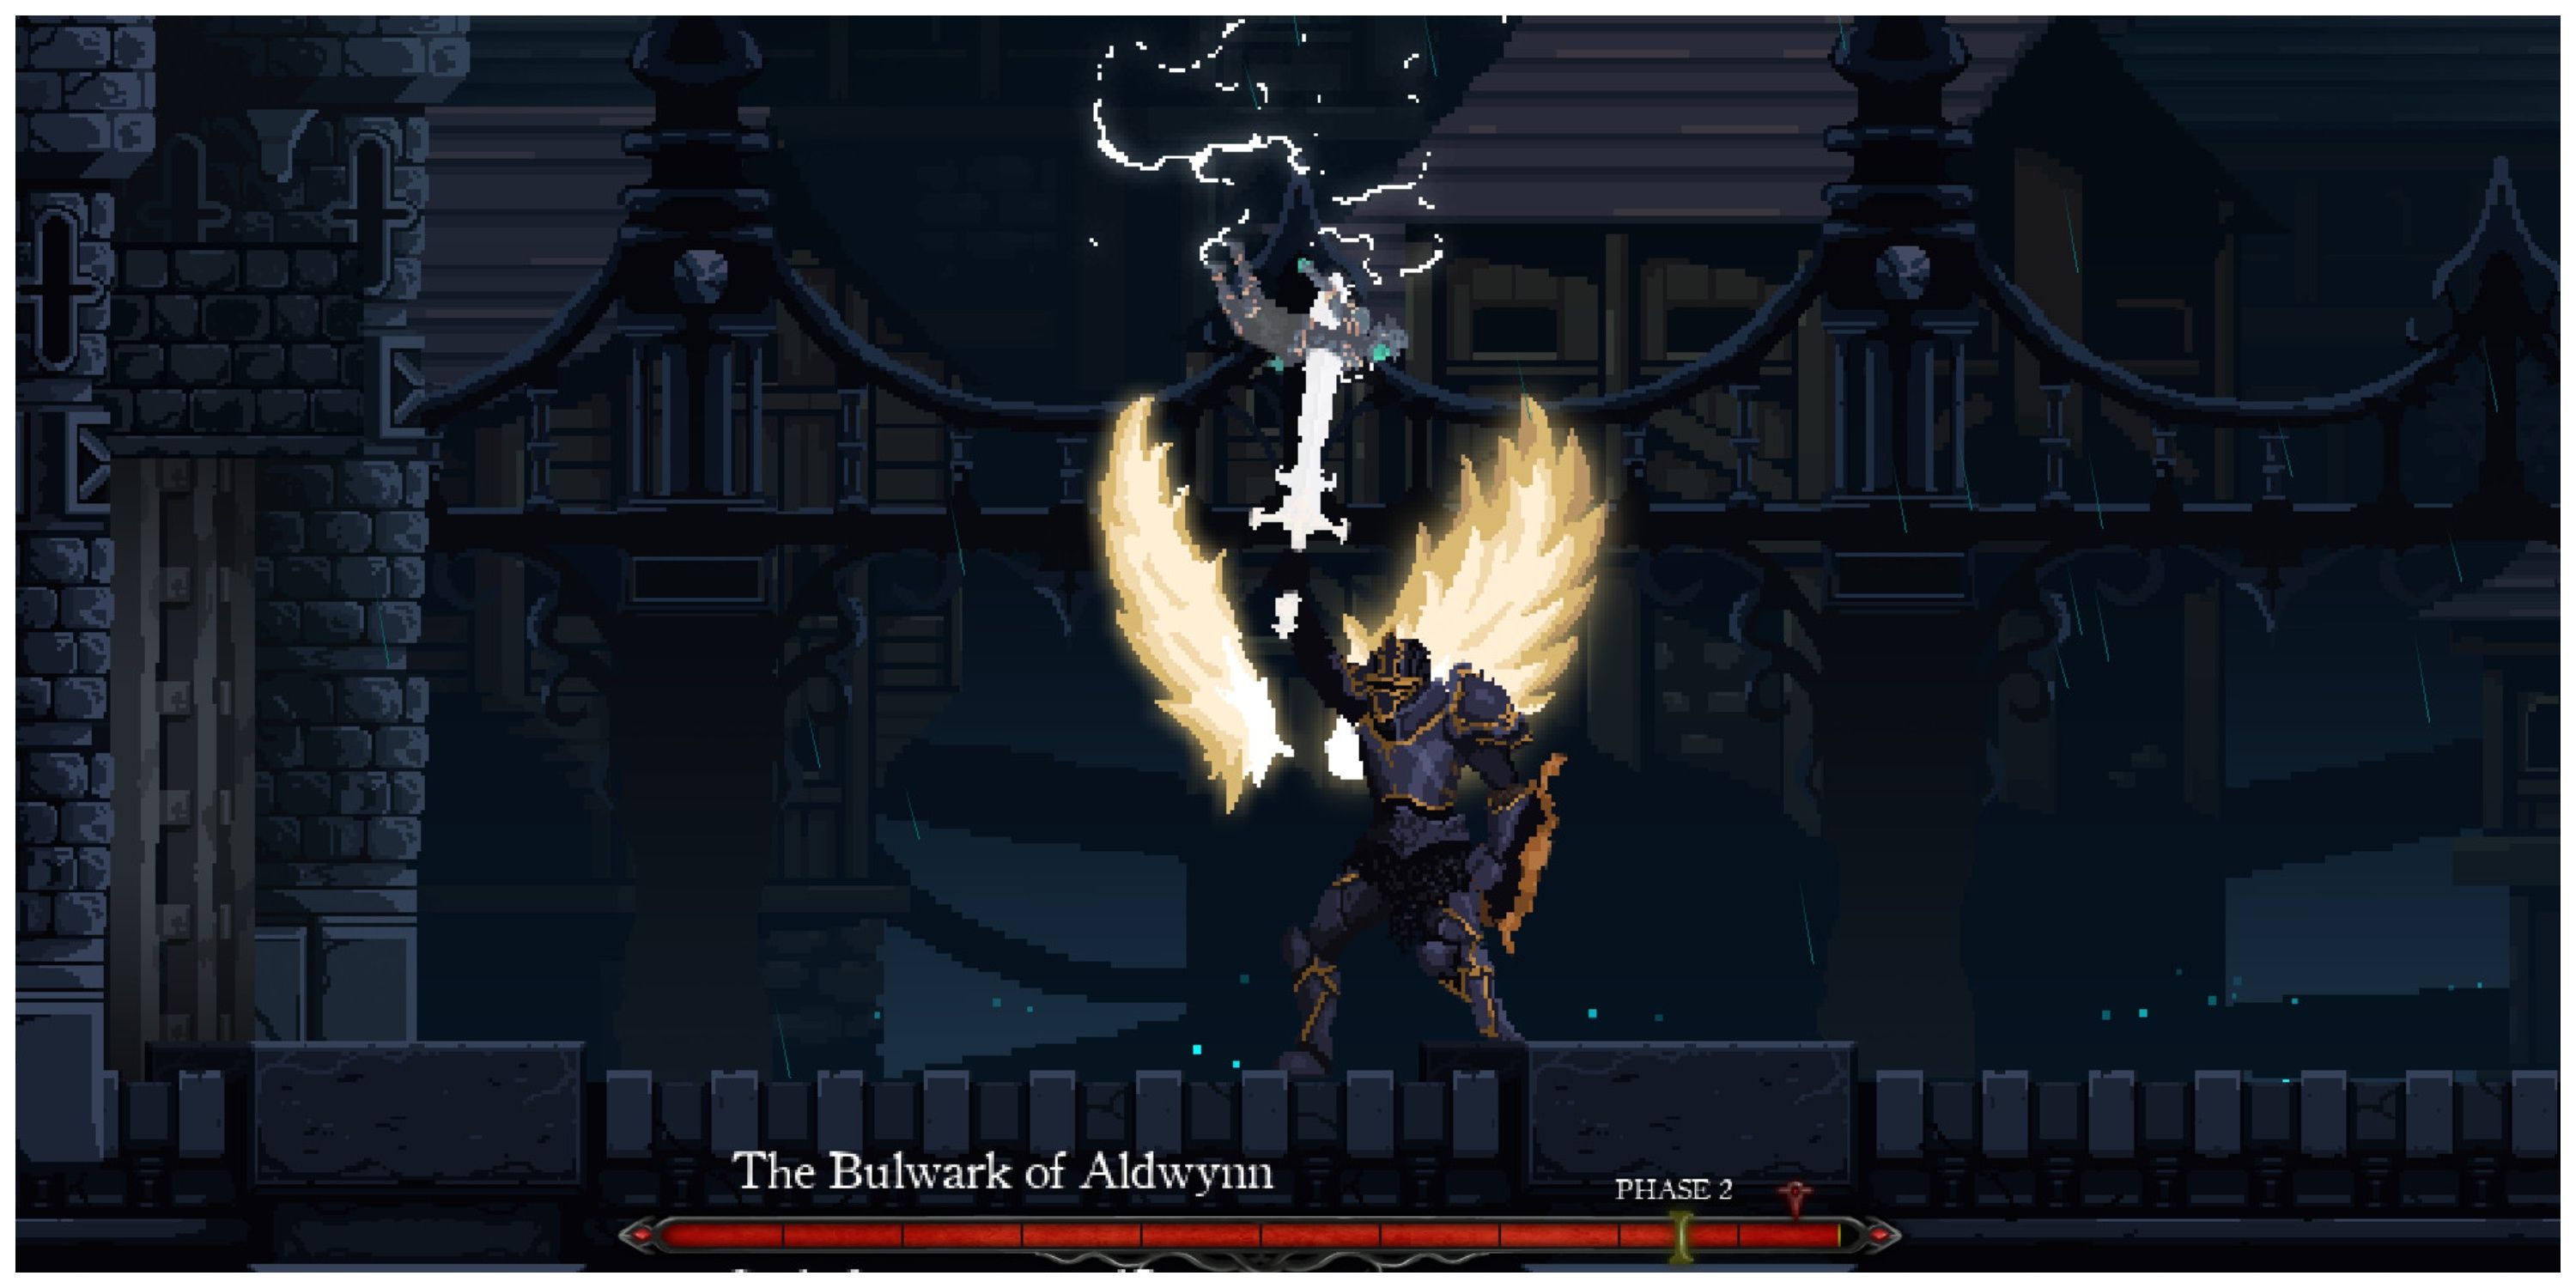 Death's Gambit: Afterlife, Fighting the Bulwark of Alduin